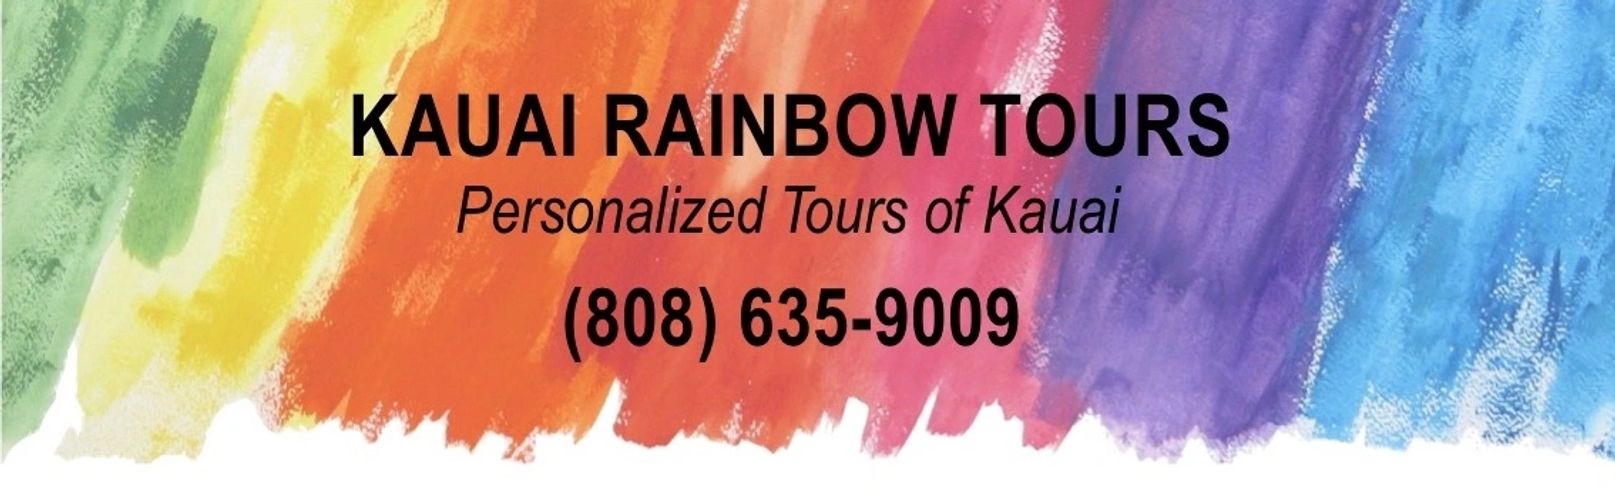 rainbow tours elite